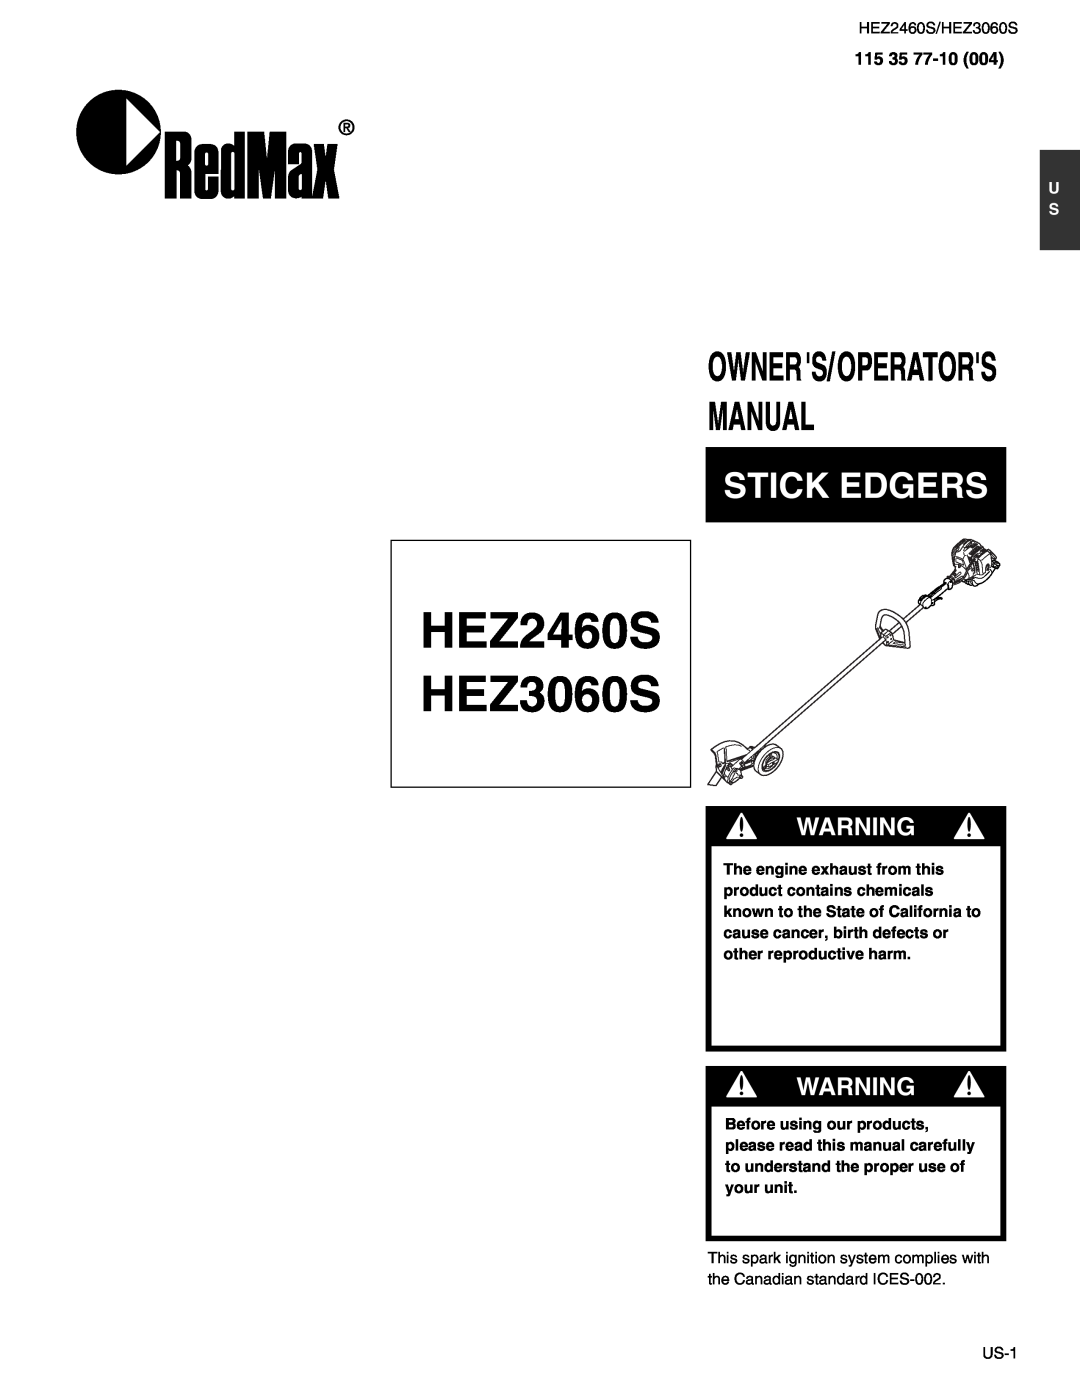 RedMax manual 115 35 77-10, HEZ2460S HEZ3060S, Manual, Stick Edgers, Owners/Operators 